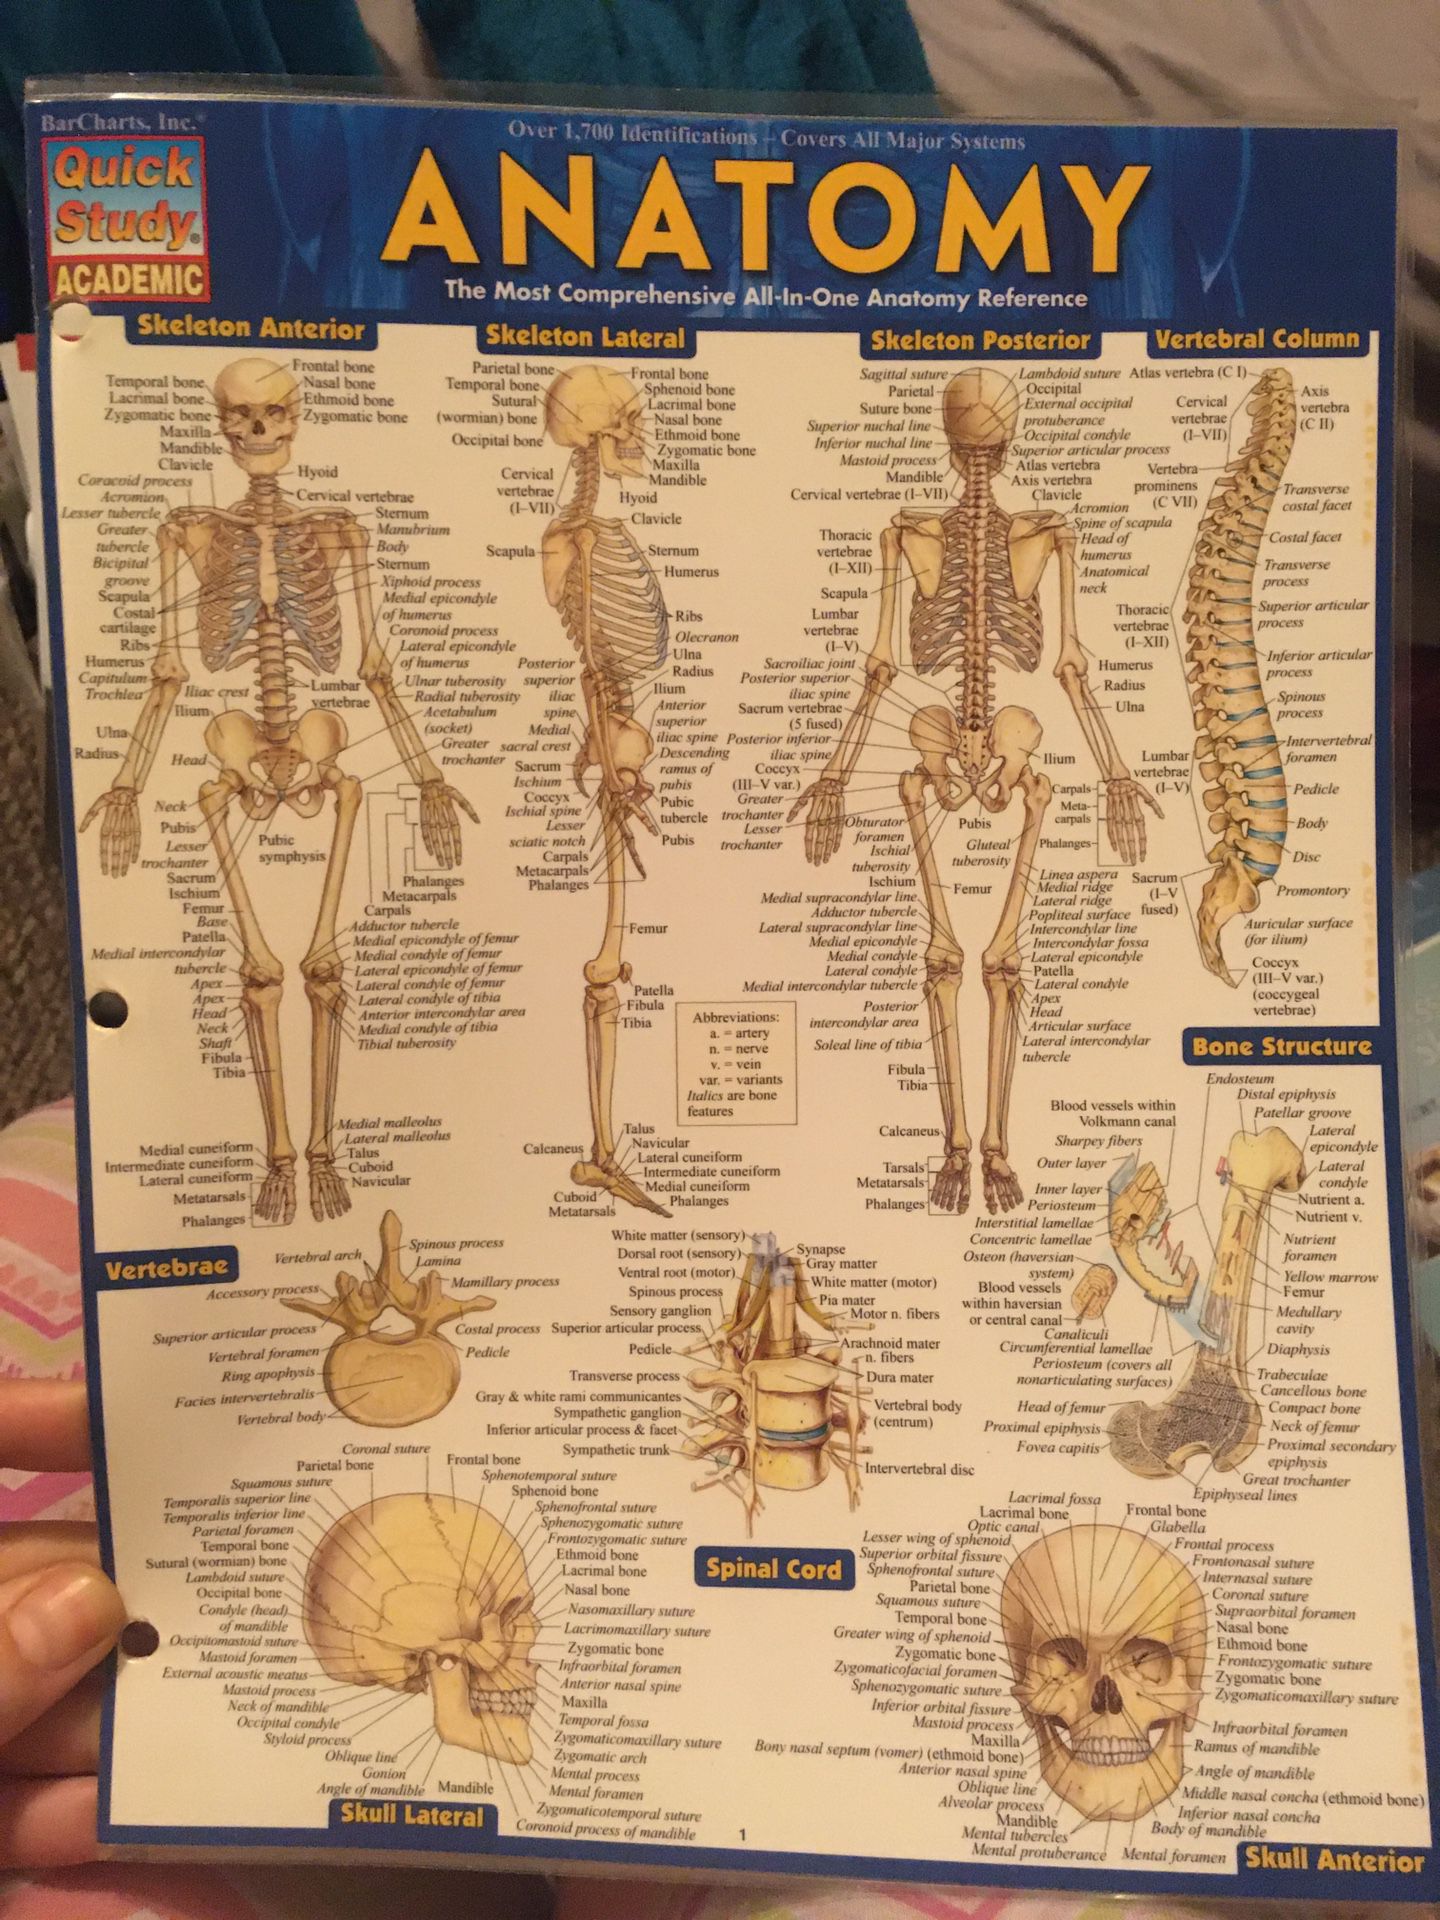 Anatomy quick study over 1,700 identifications